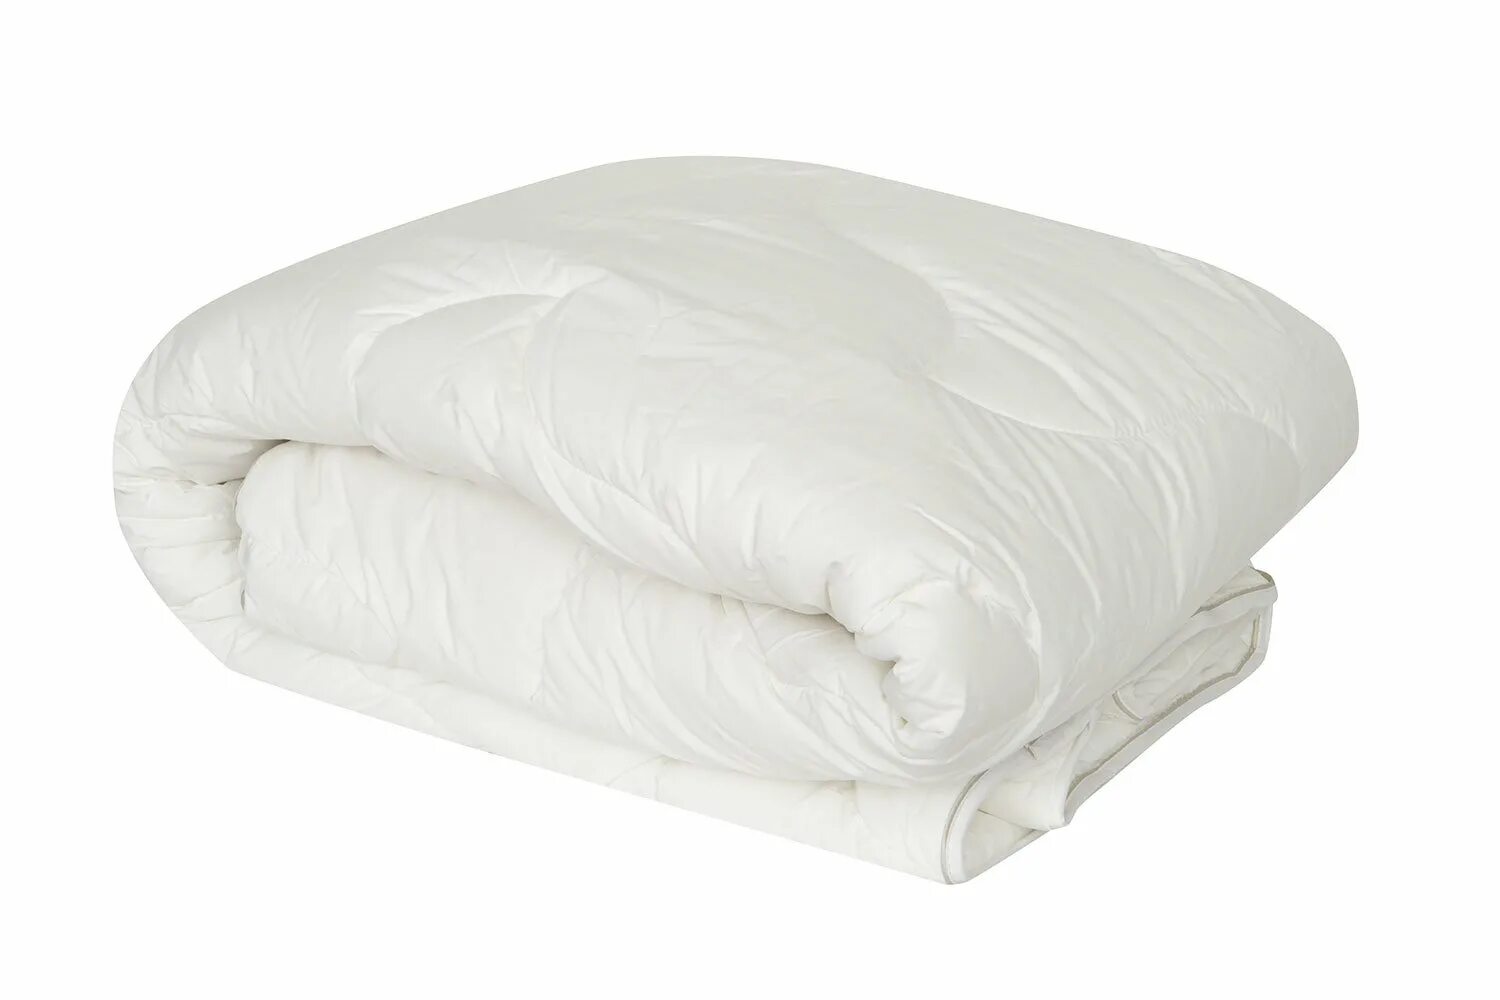 Лучшие производители одеял. Одеяло. Одеявол. Одеяло без фона. Одеяло и подушка.